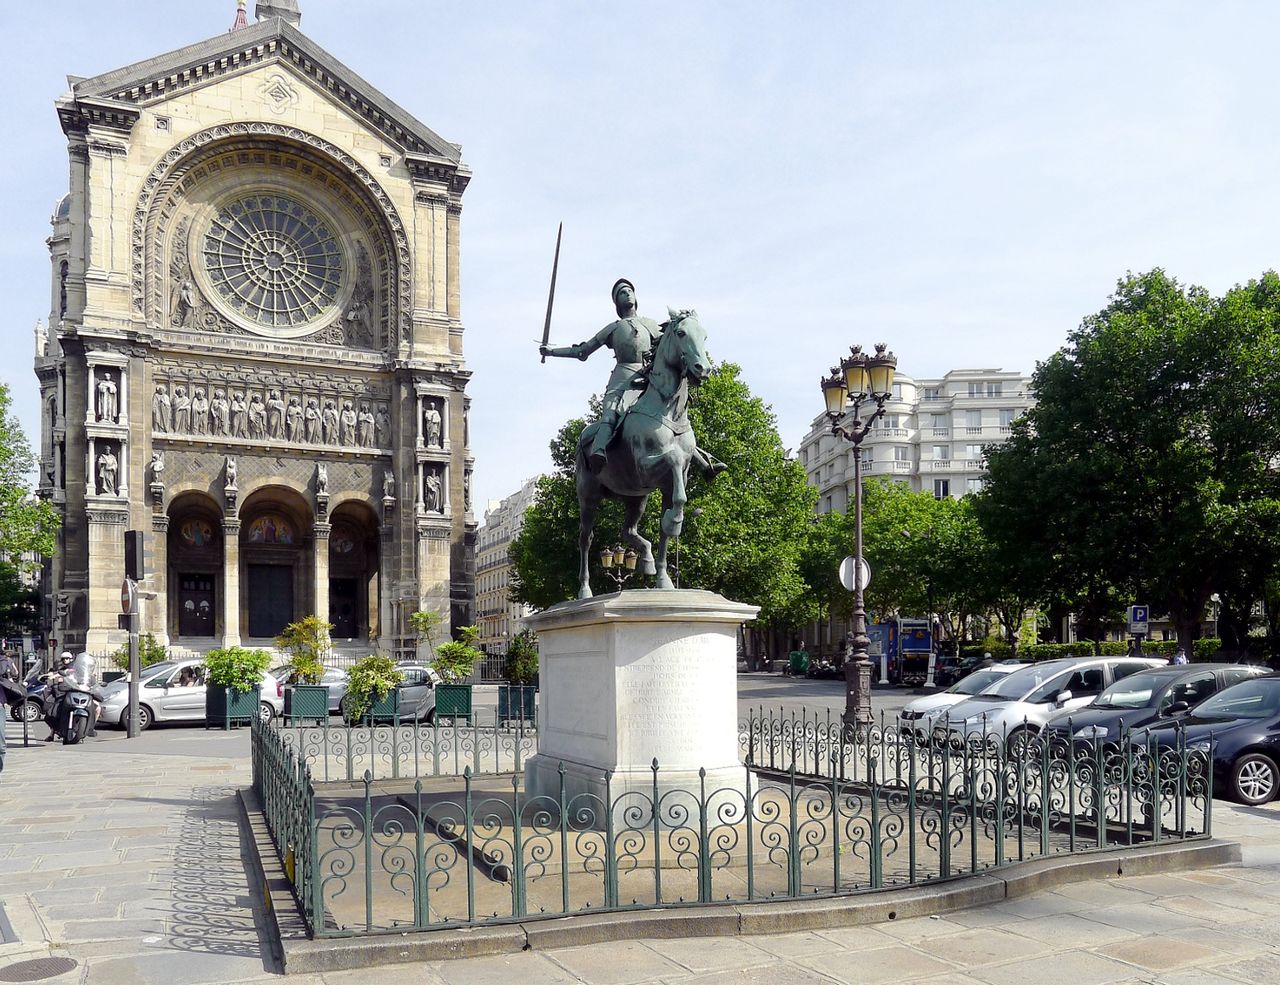 ST. JOAN OF ARC A statue in the Place Saint-Augustin, Paris.